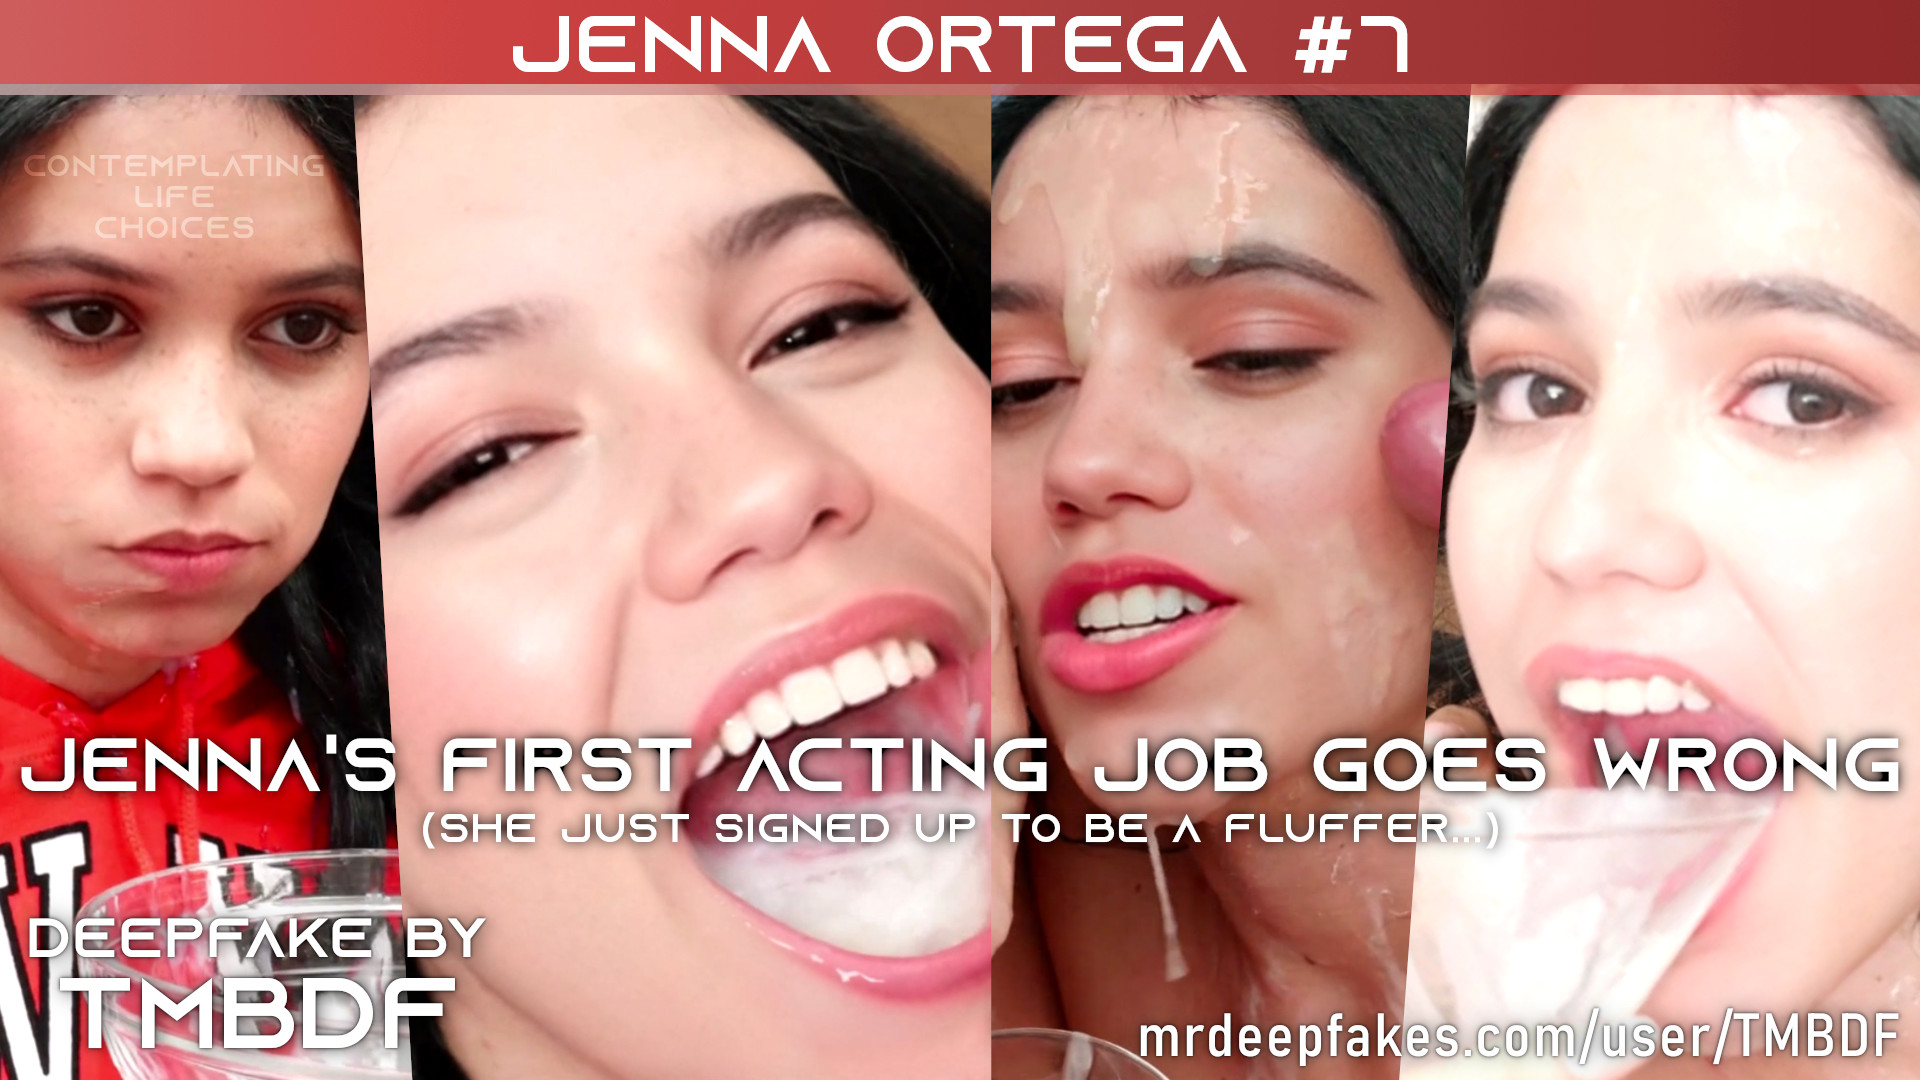 Jenna Ortega #7 - PREVIEW - Full version (35 min.) in description